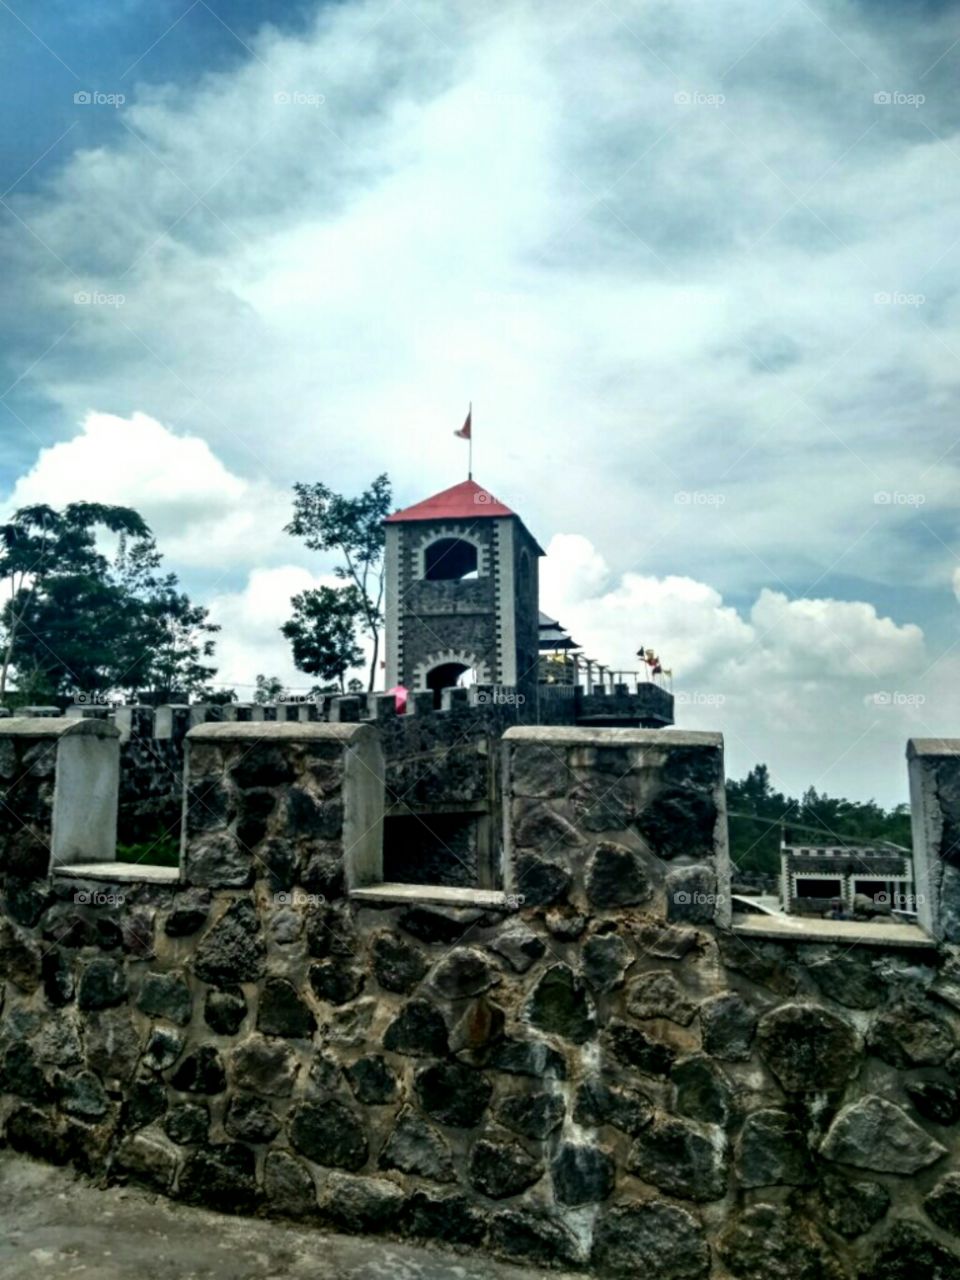 The Lost World Castle Indonesia